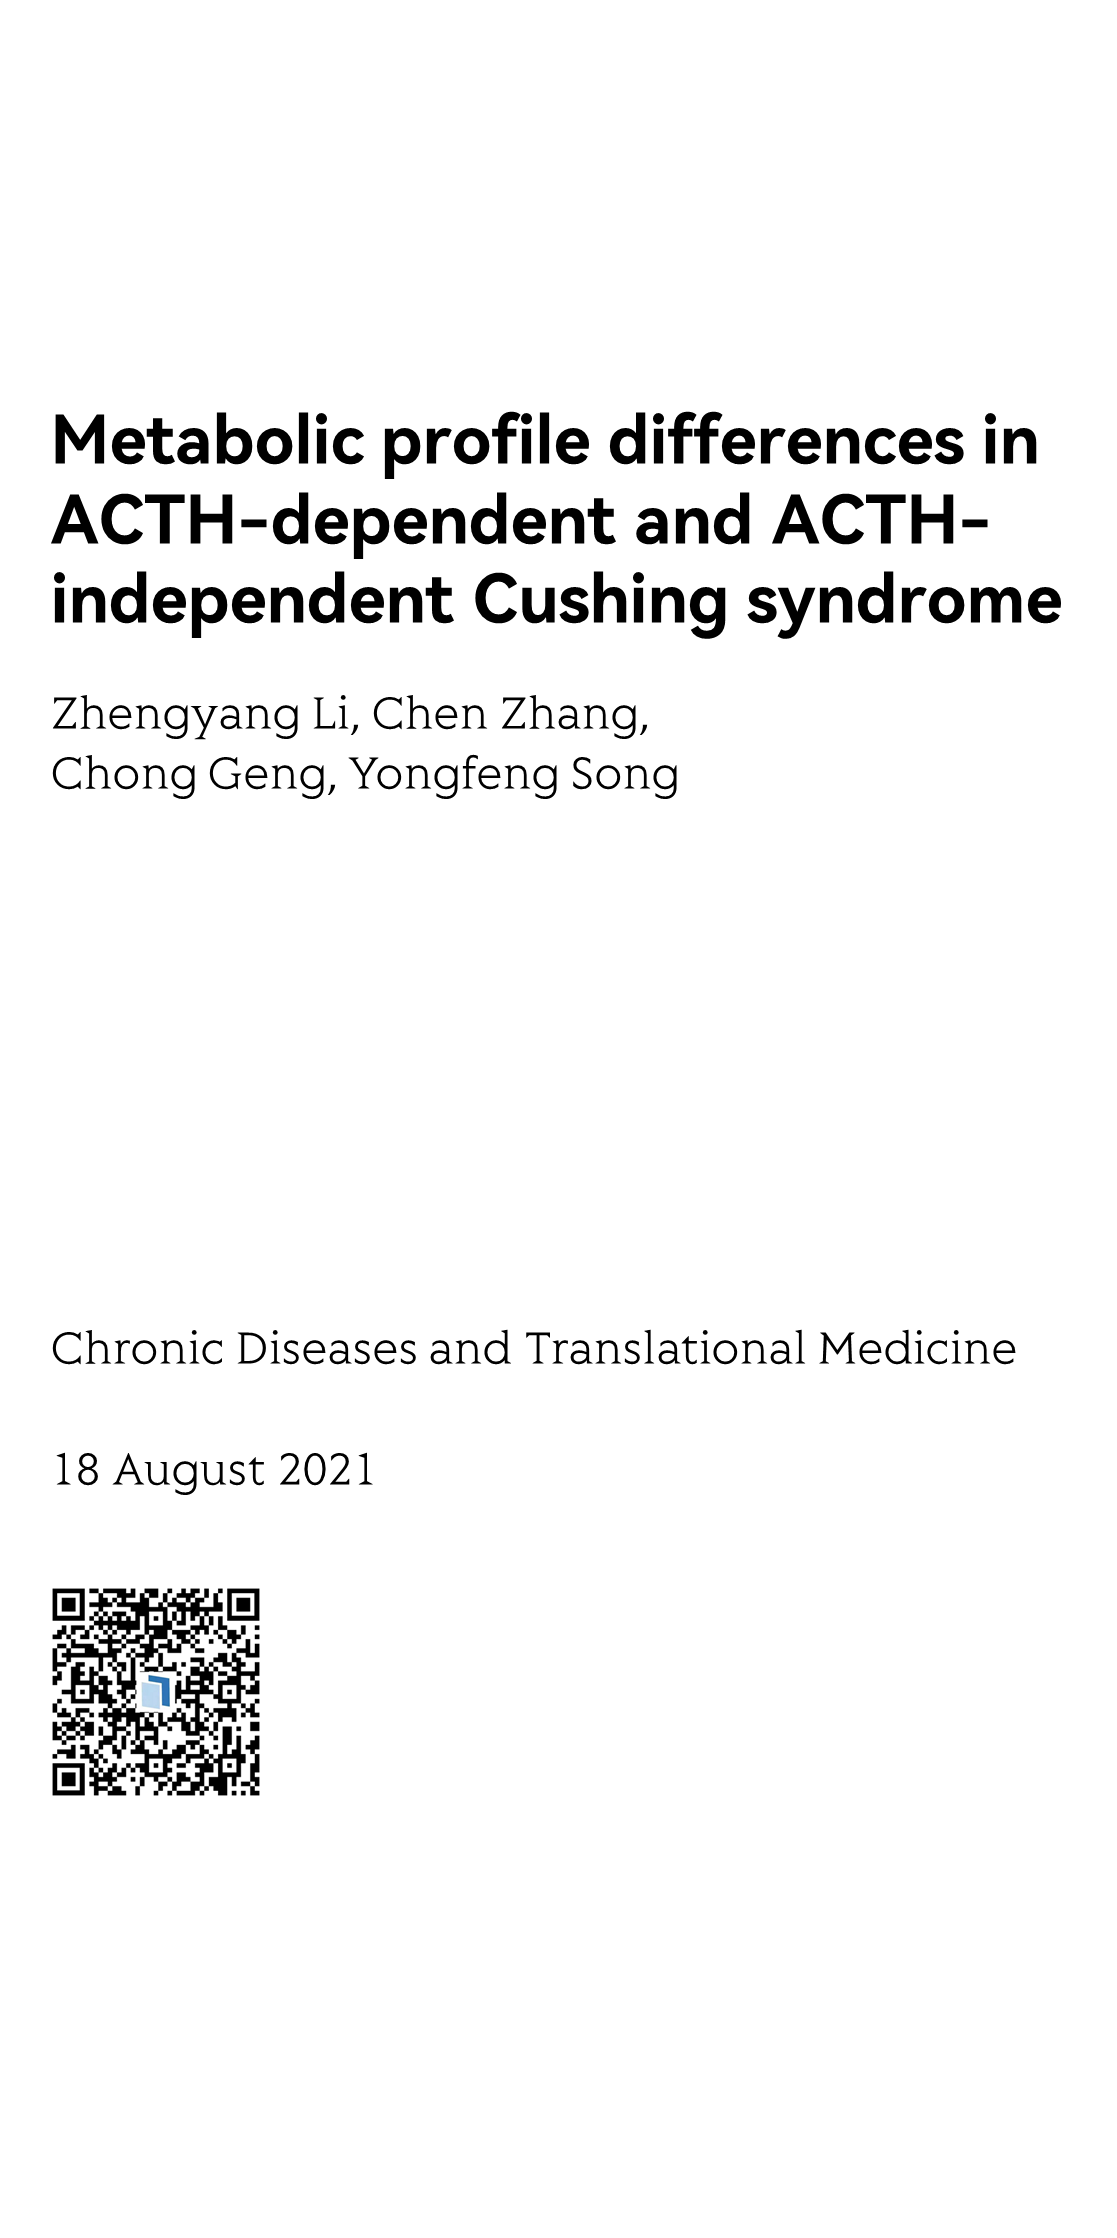 Chronic Diseases and Translational Medicine_1